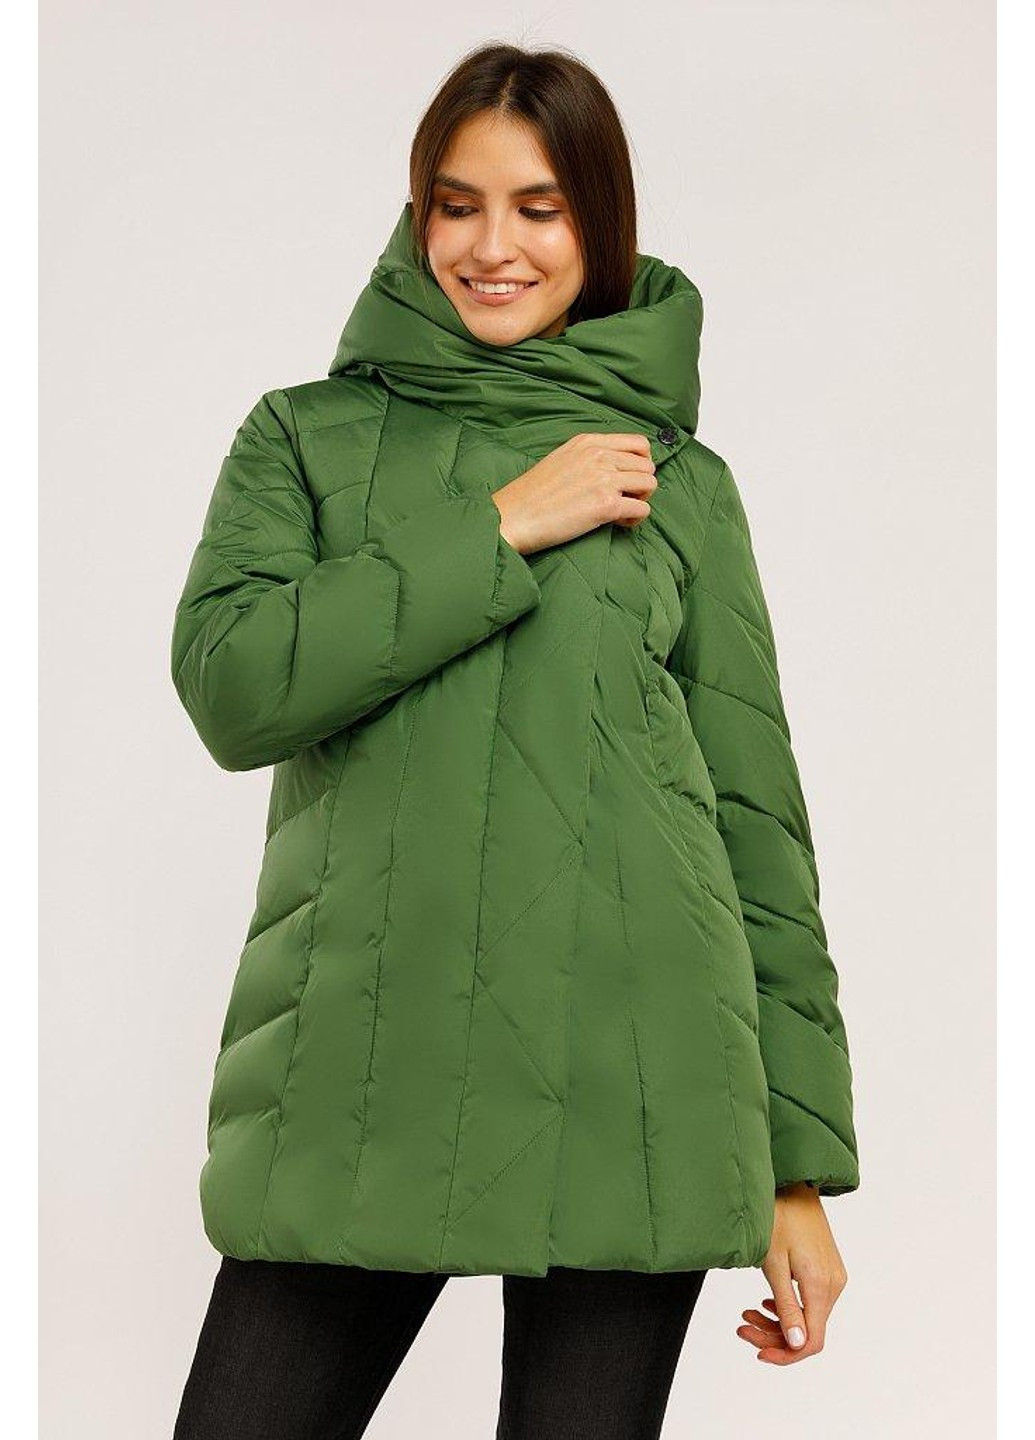 Зеленая зимняя зимняя куртка w19-11005-516 Finn Flare